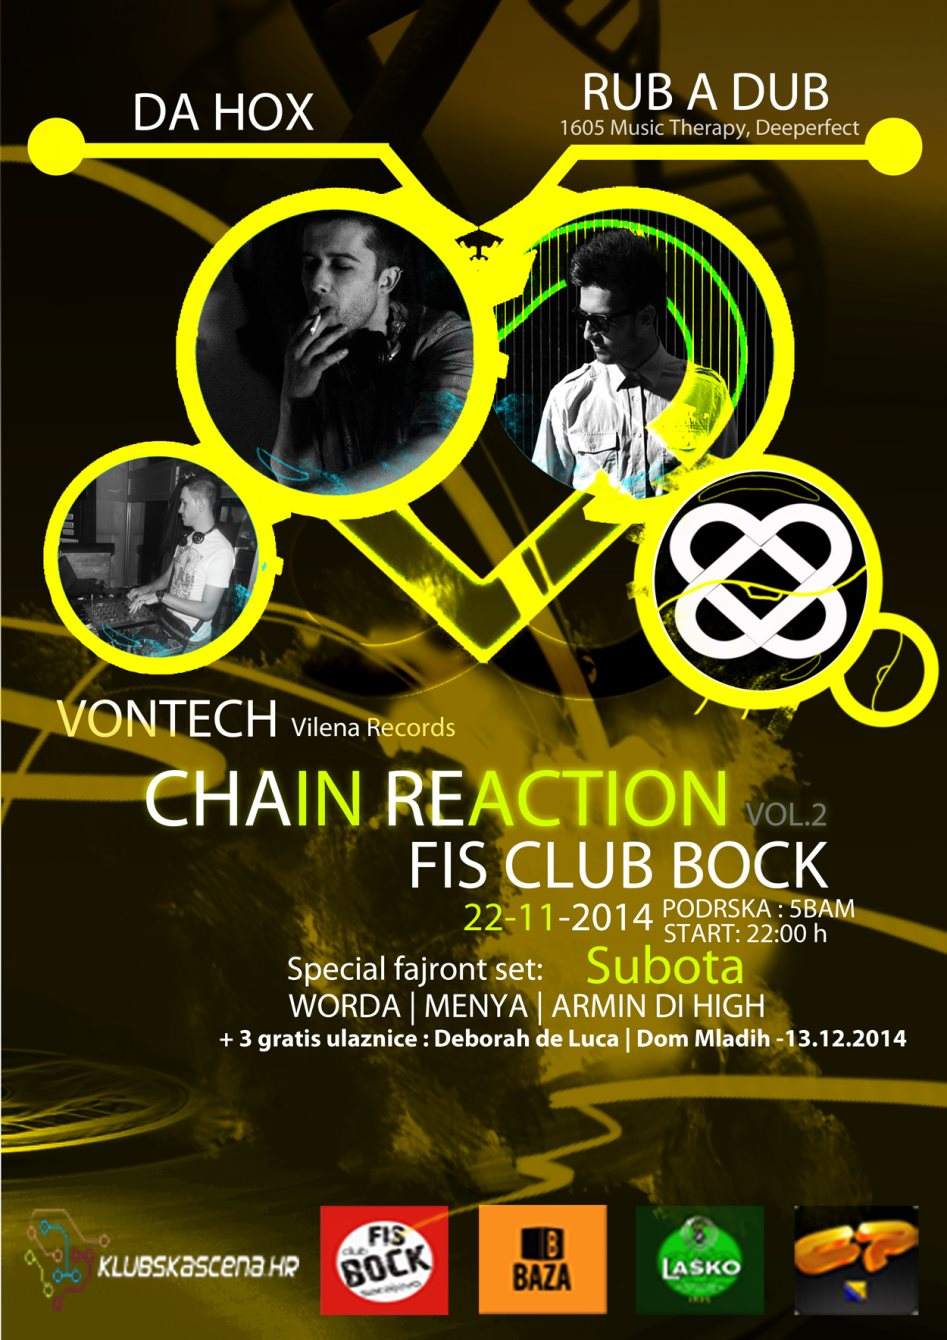 Fis Club Bock - Chain Reaction Vol. 2 - Página trasera